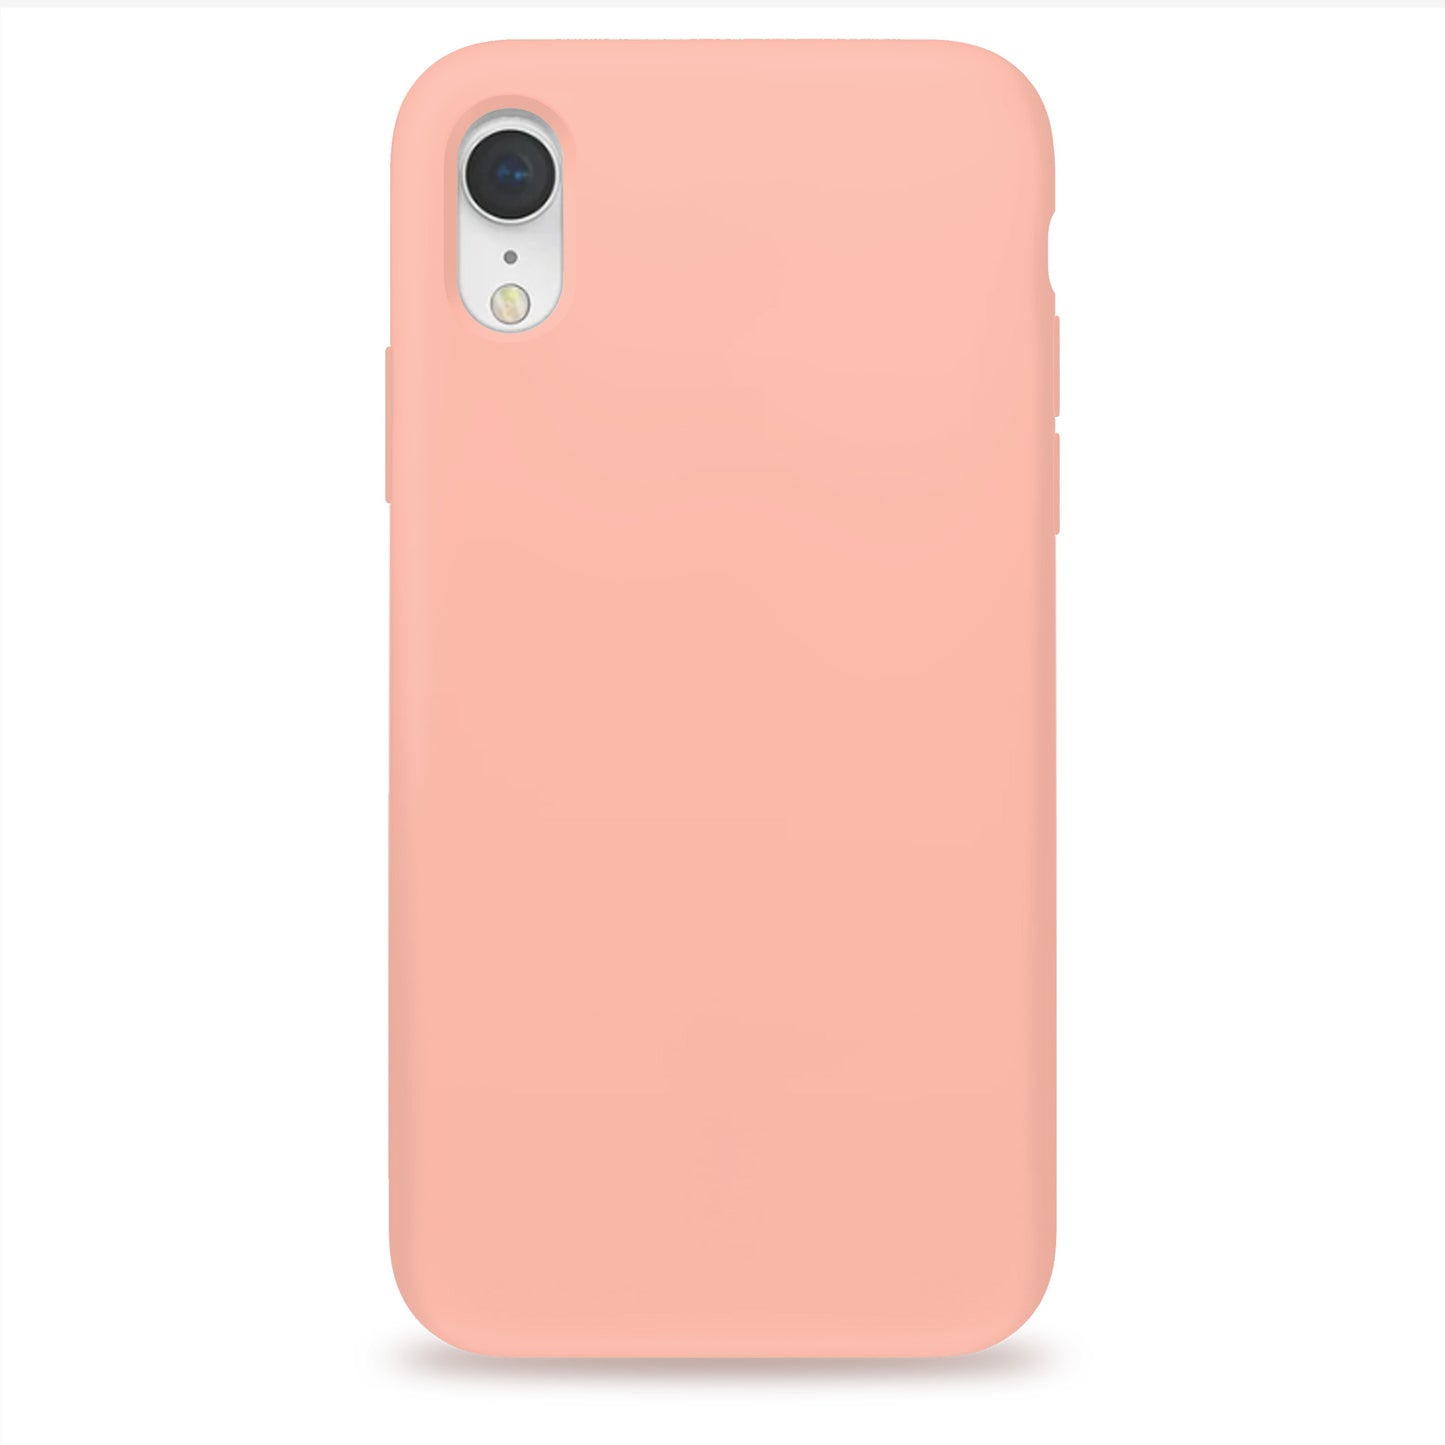 Coque en silicone rose cerise pour iPhone et Samsung